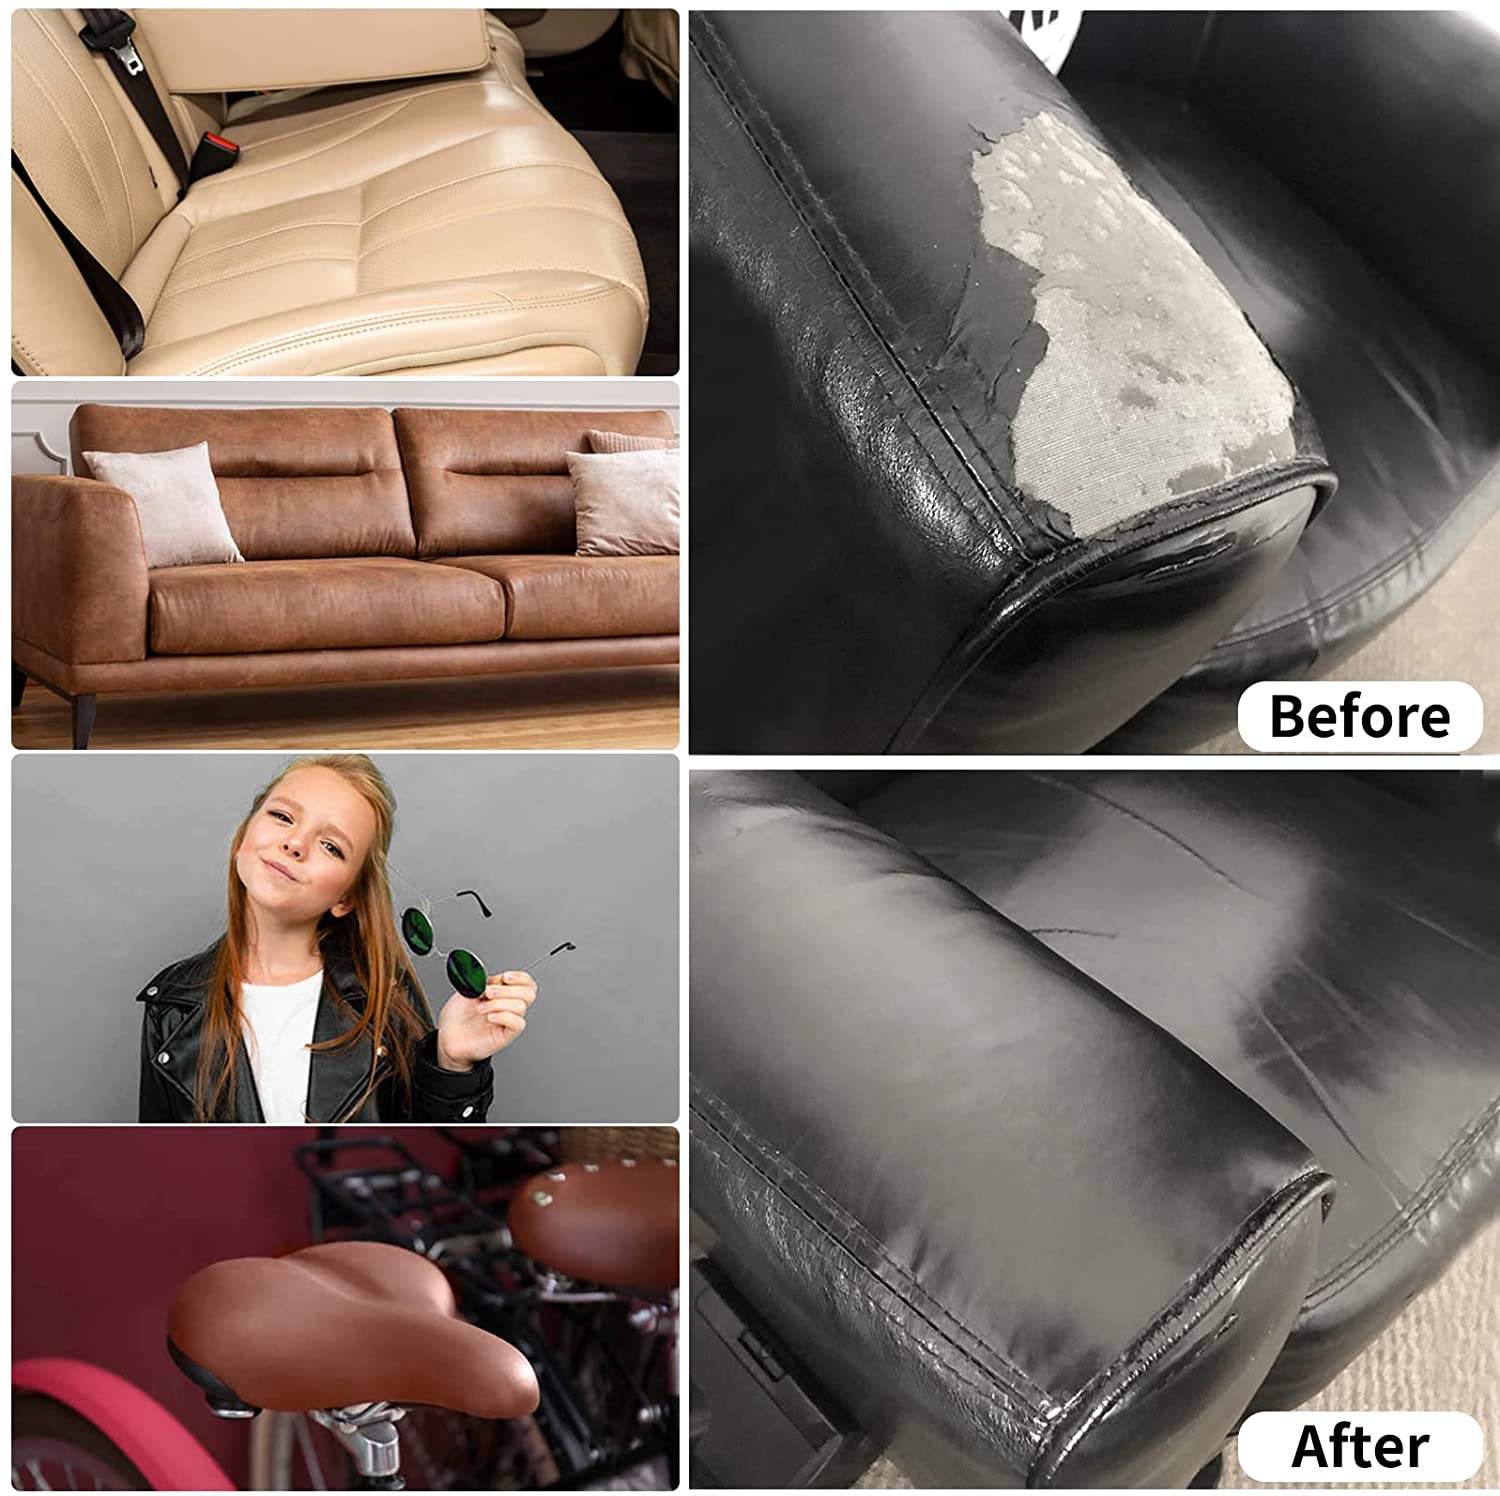 Memotoo Leather Repair Patch, Vinyl Repair Kit, Self-Adhesive Leather Repair  Tape for Sofas, Drivers Car Seat, Couch, Handbags, Jackets (Light Brown,  8×11 inch)… 